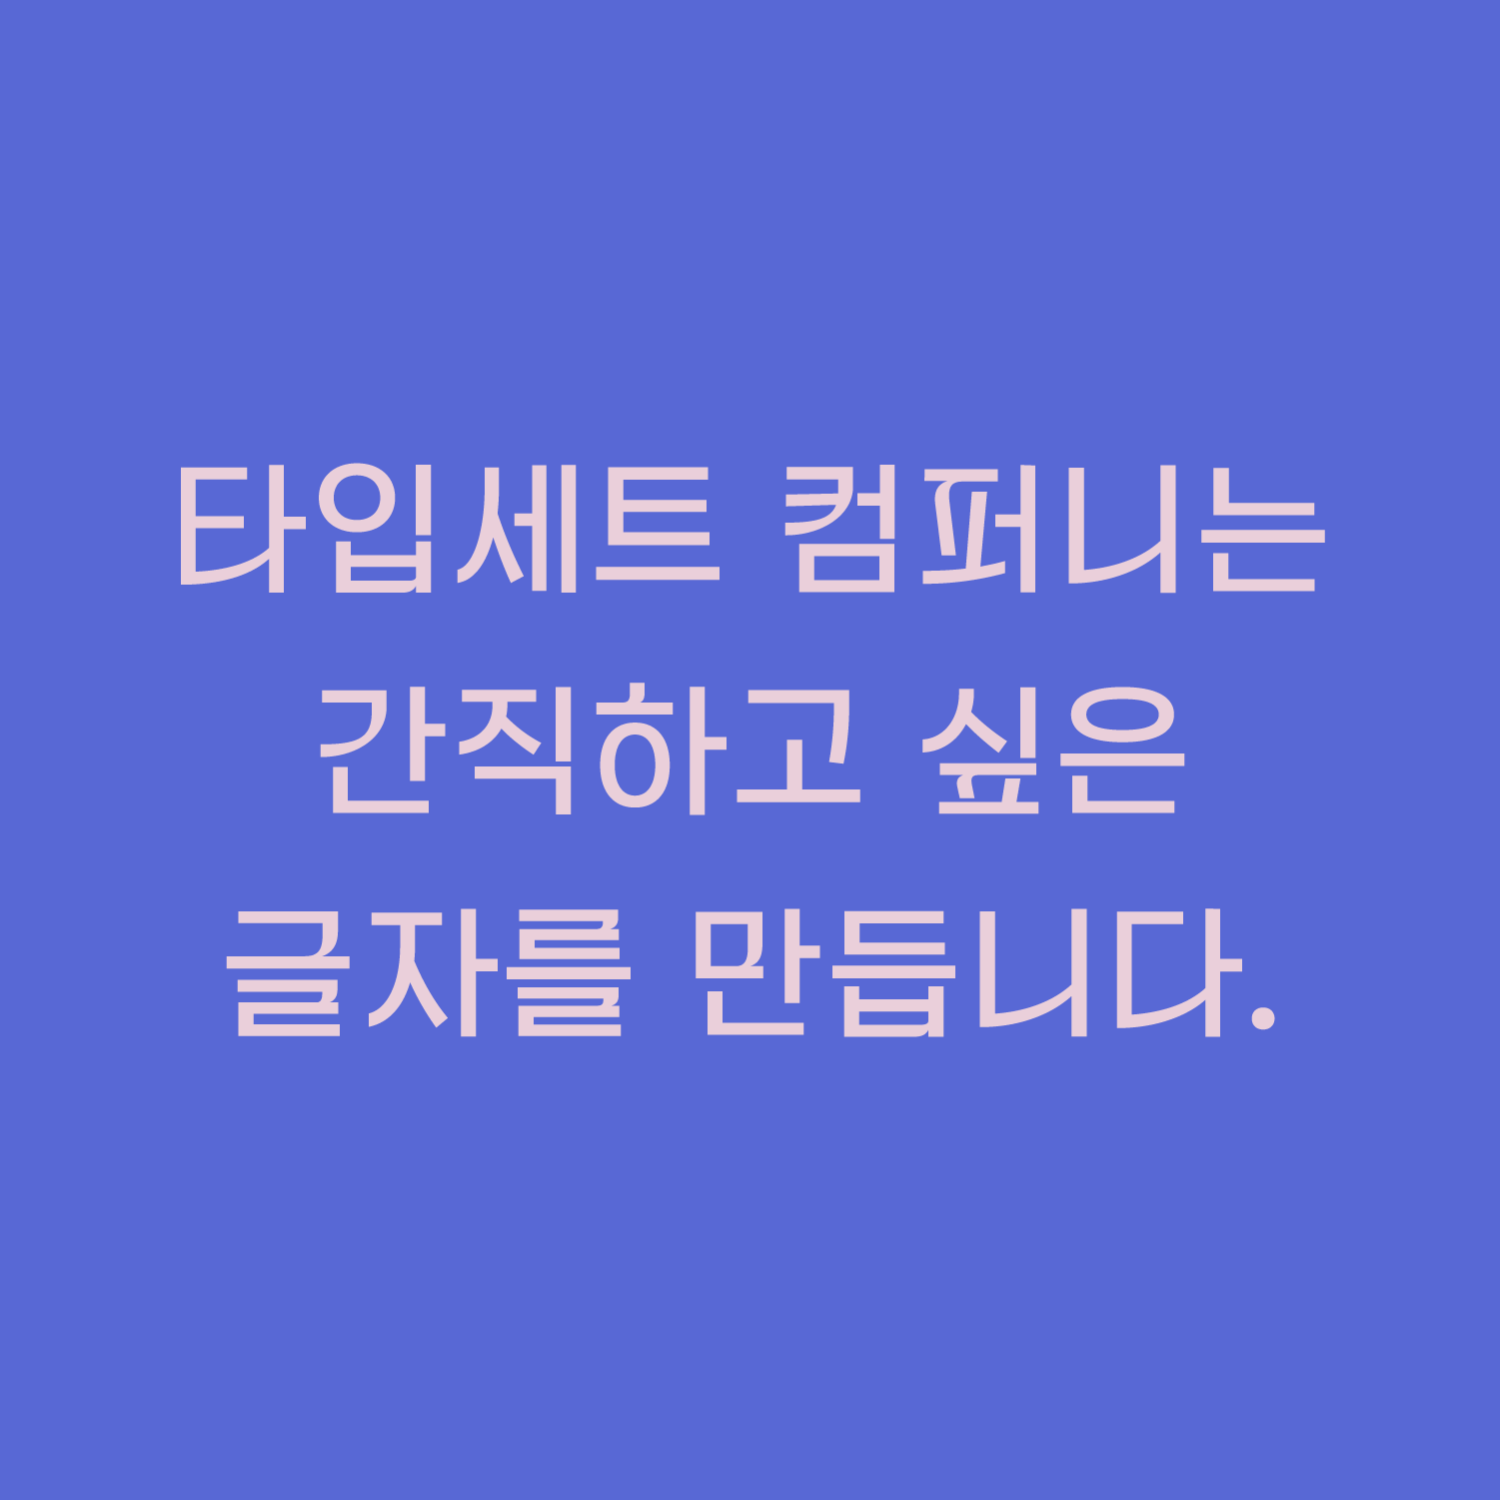 [FONT] 봉주르산스 Text Regular